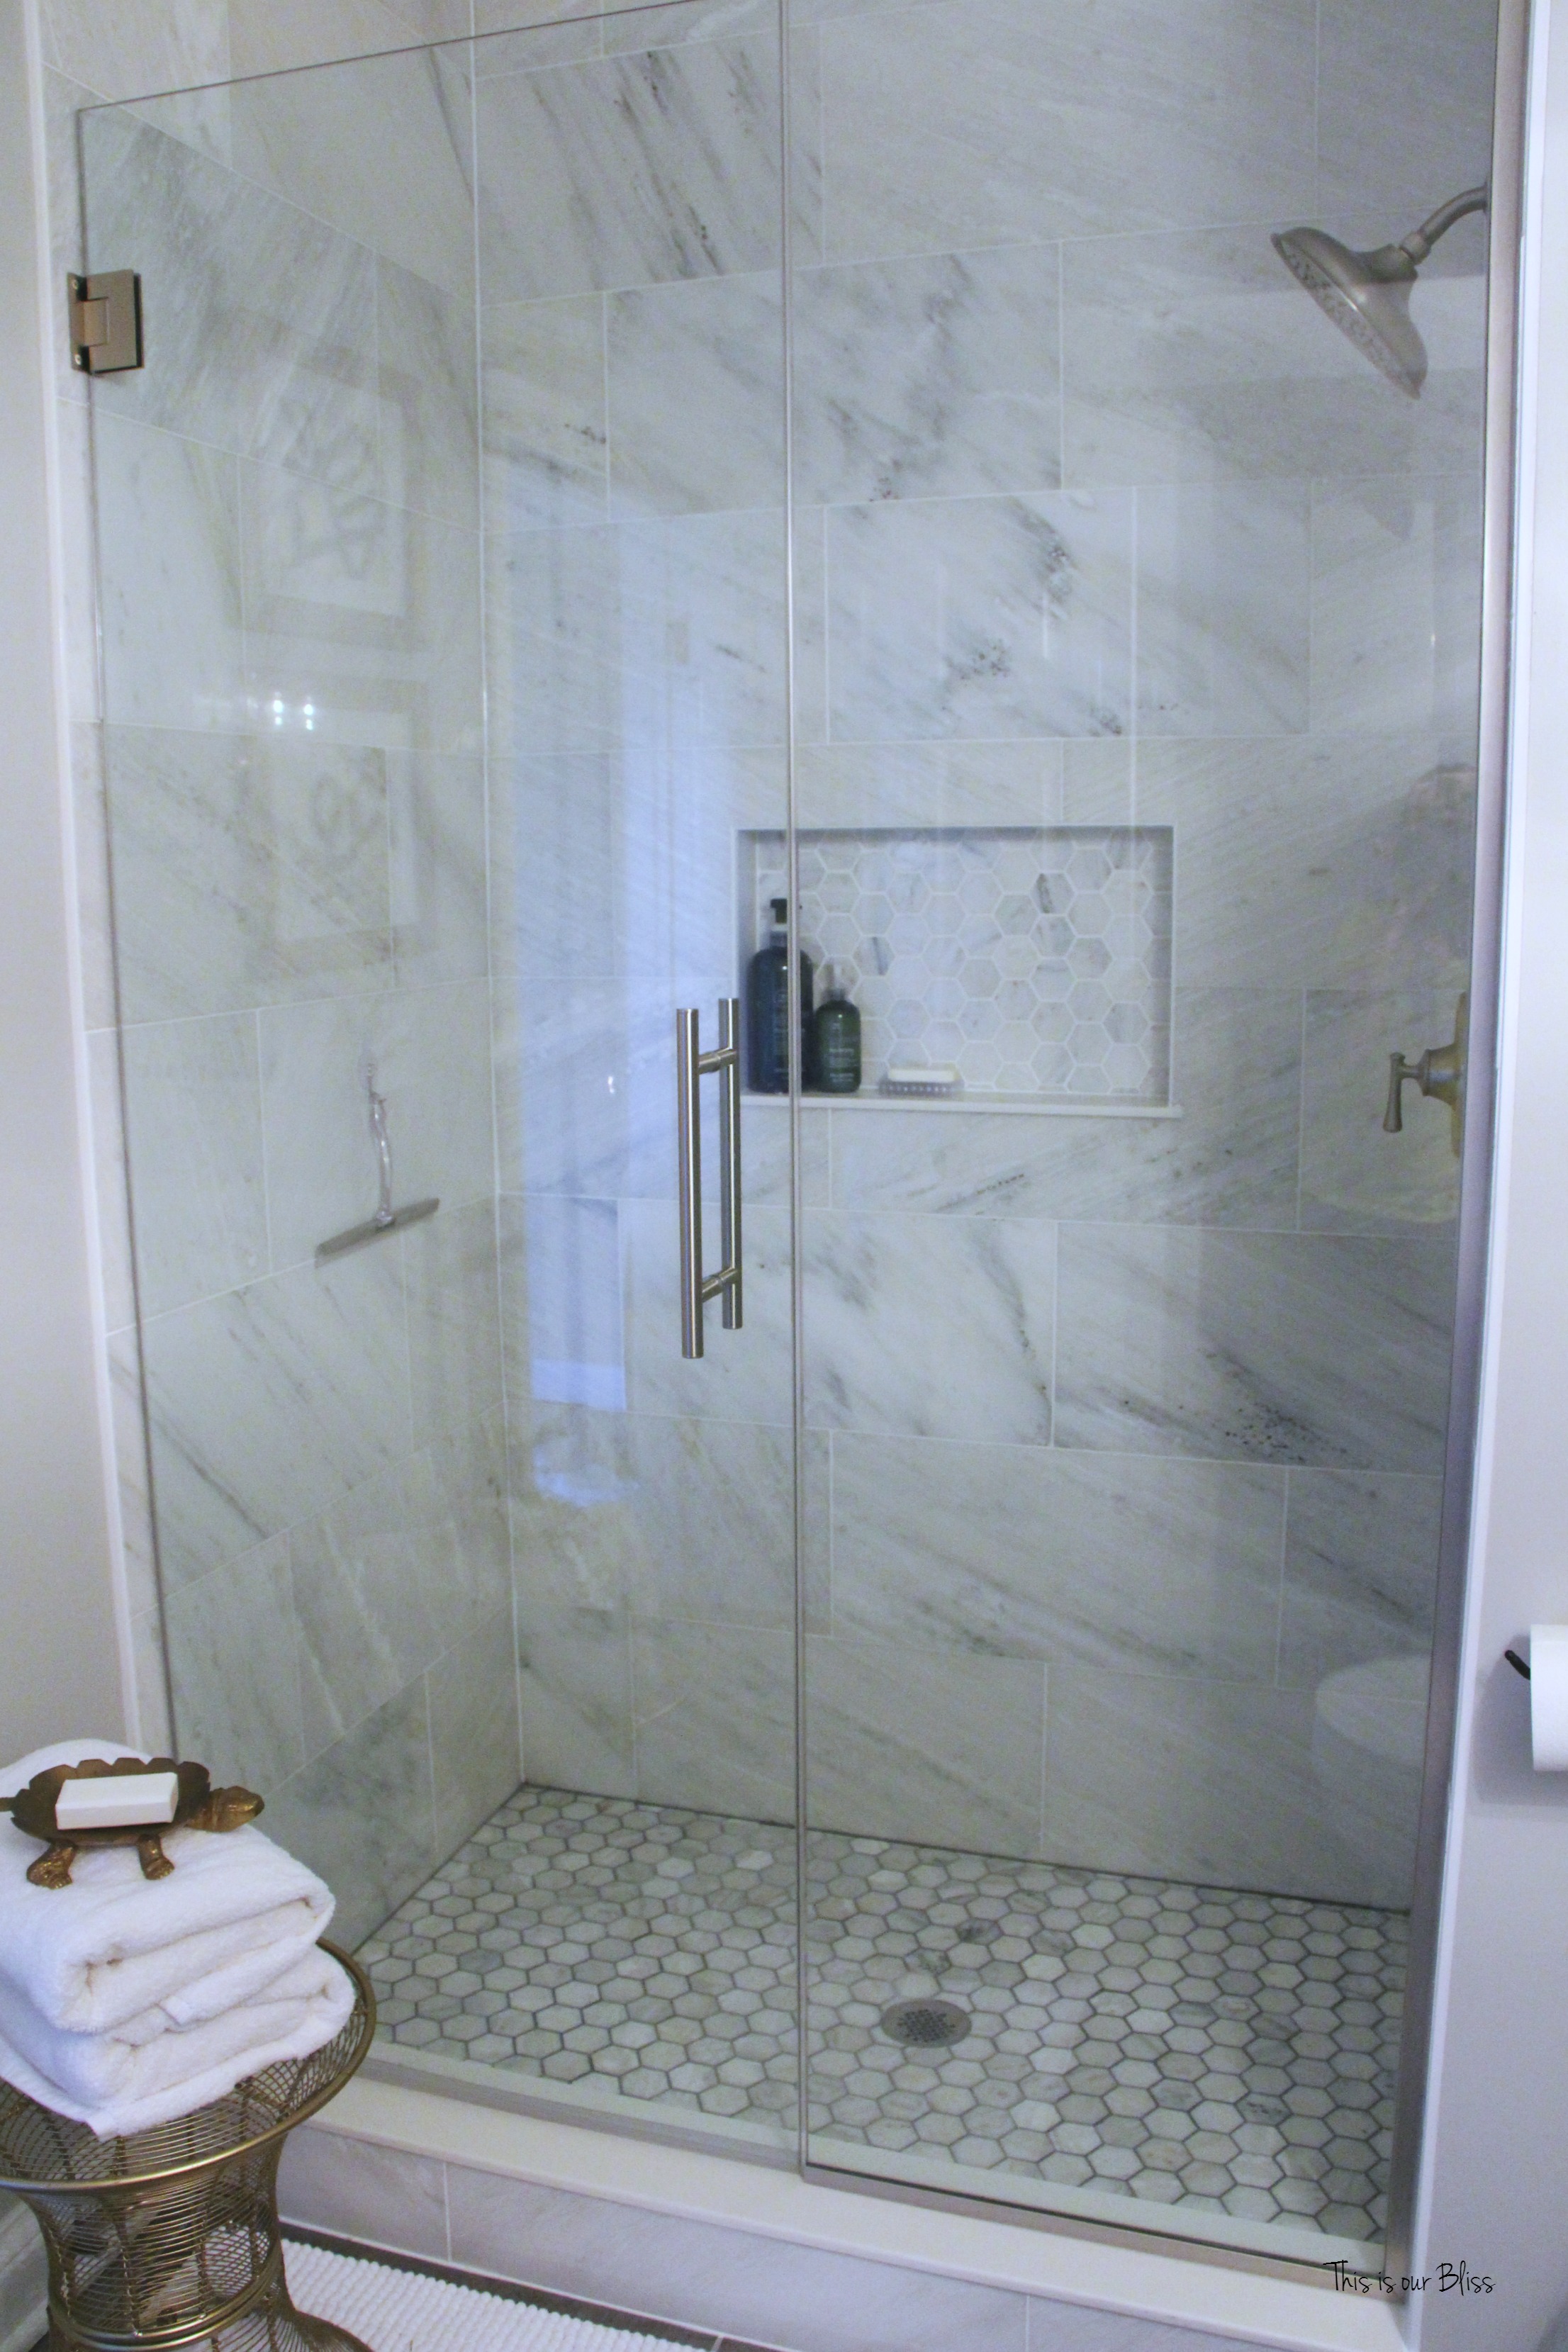 https://thisisourbliss.com/wp-content/uploads/2016/04/Basement-bathroom-reveal-modern-rustic-glam-neutral-bathroom-decor-marble-shower-hexagon-tile-shower-1-This-is-our-Bliss.jpg